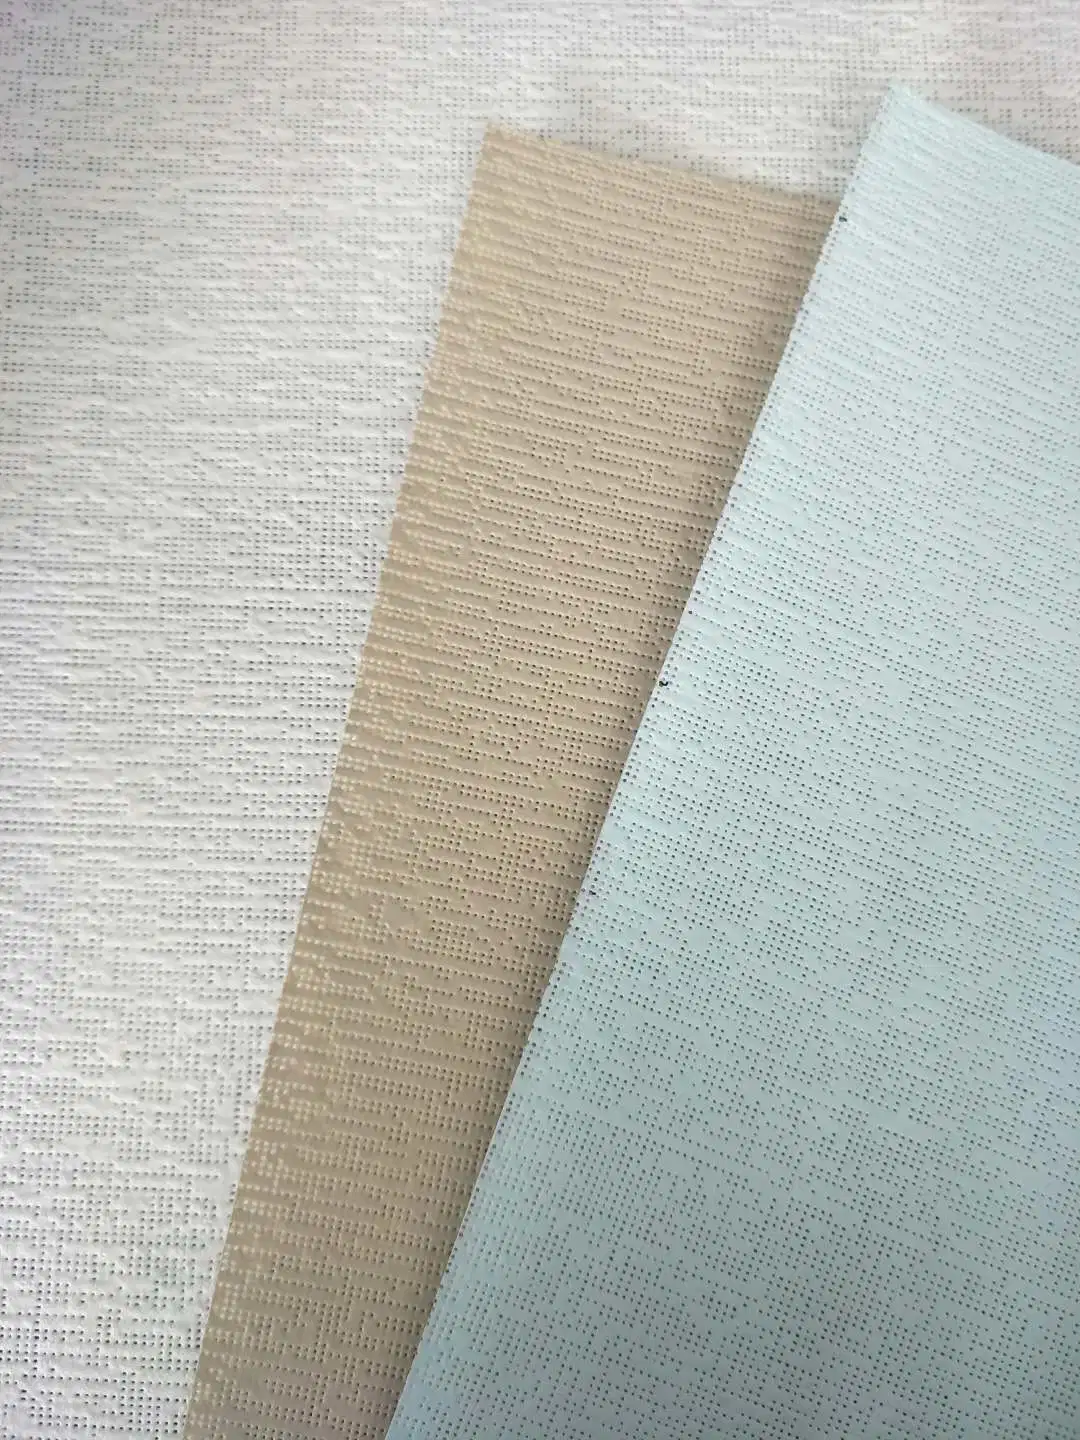 PVC Coated Fiberglass Fabric for Curtain